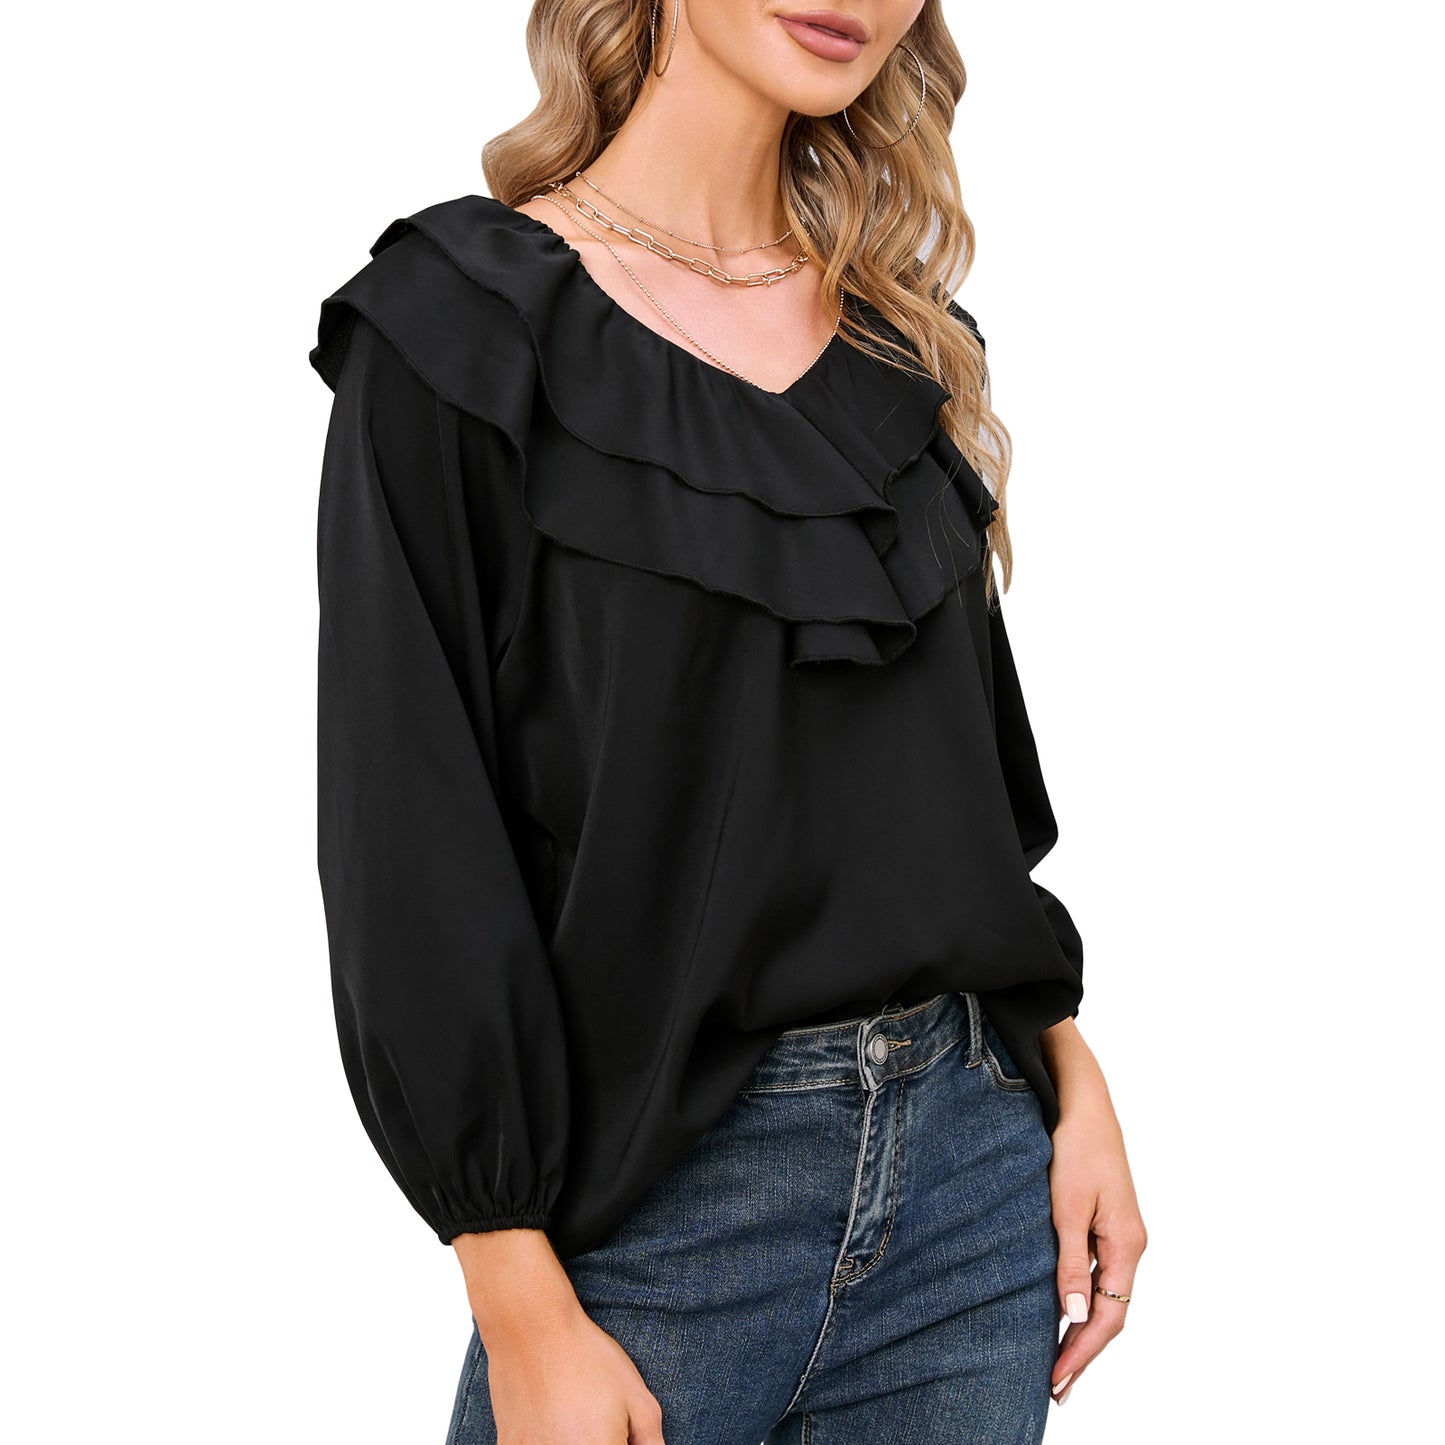 EXLURA Women’s Layered Ruffle Flowy Tops V Neck Long Puff Sleeve Blouses Shirts Casual Dressy Tops